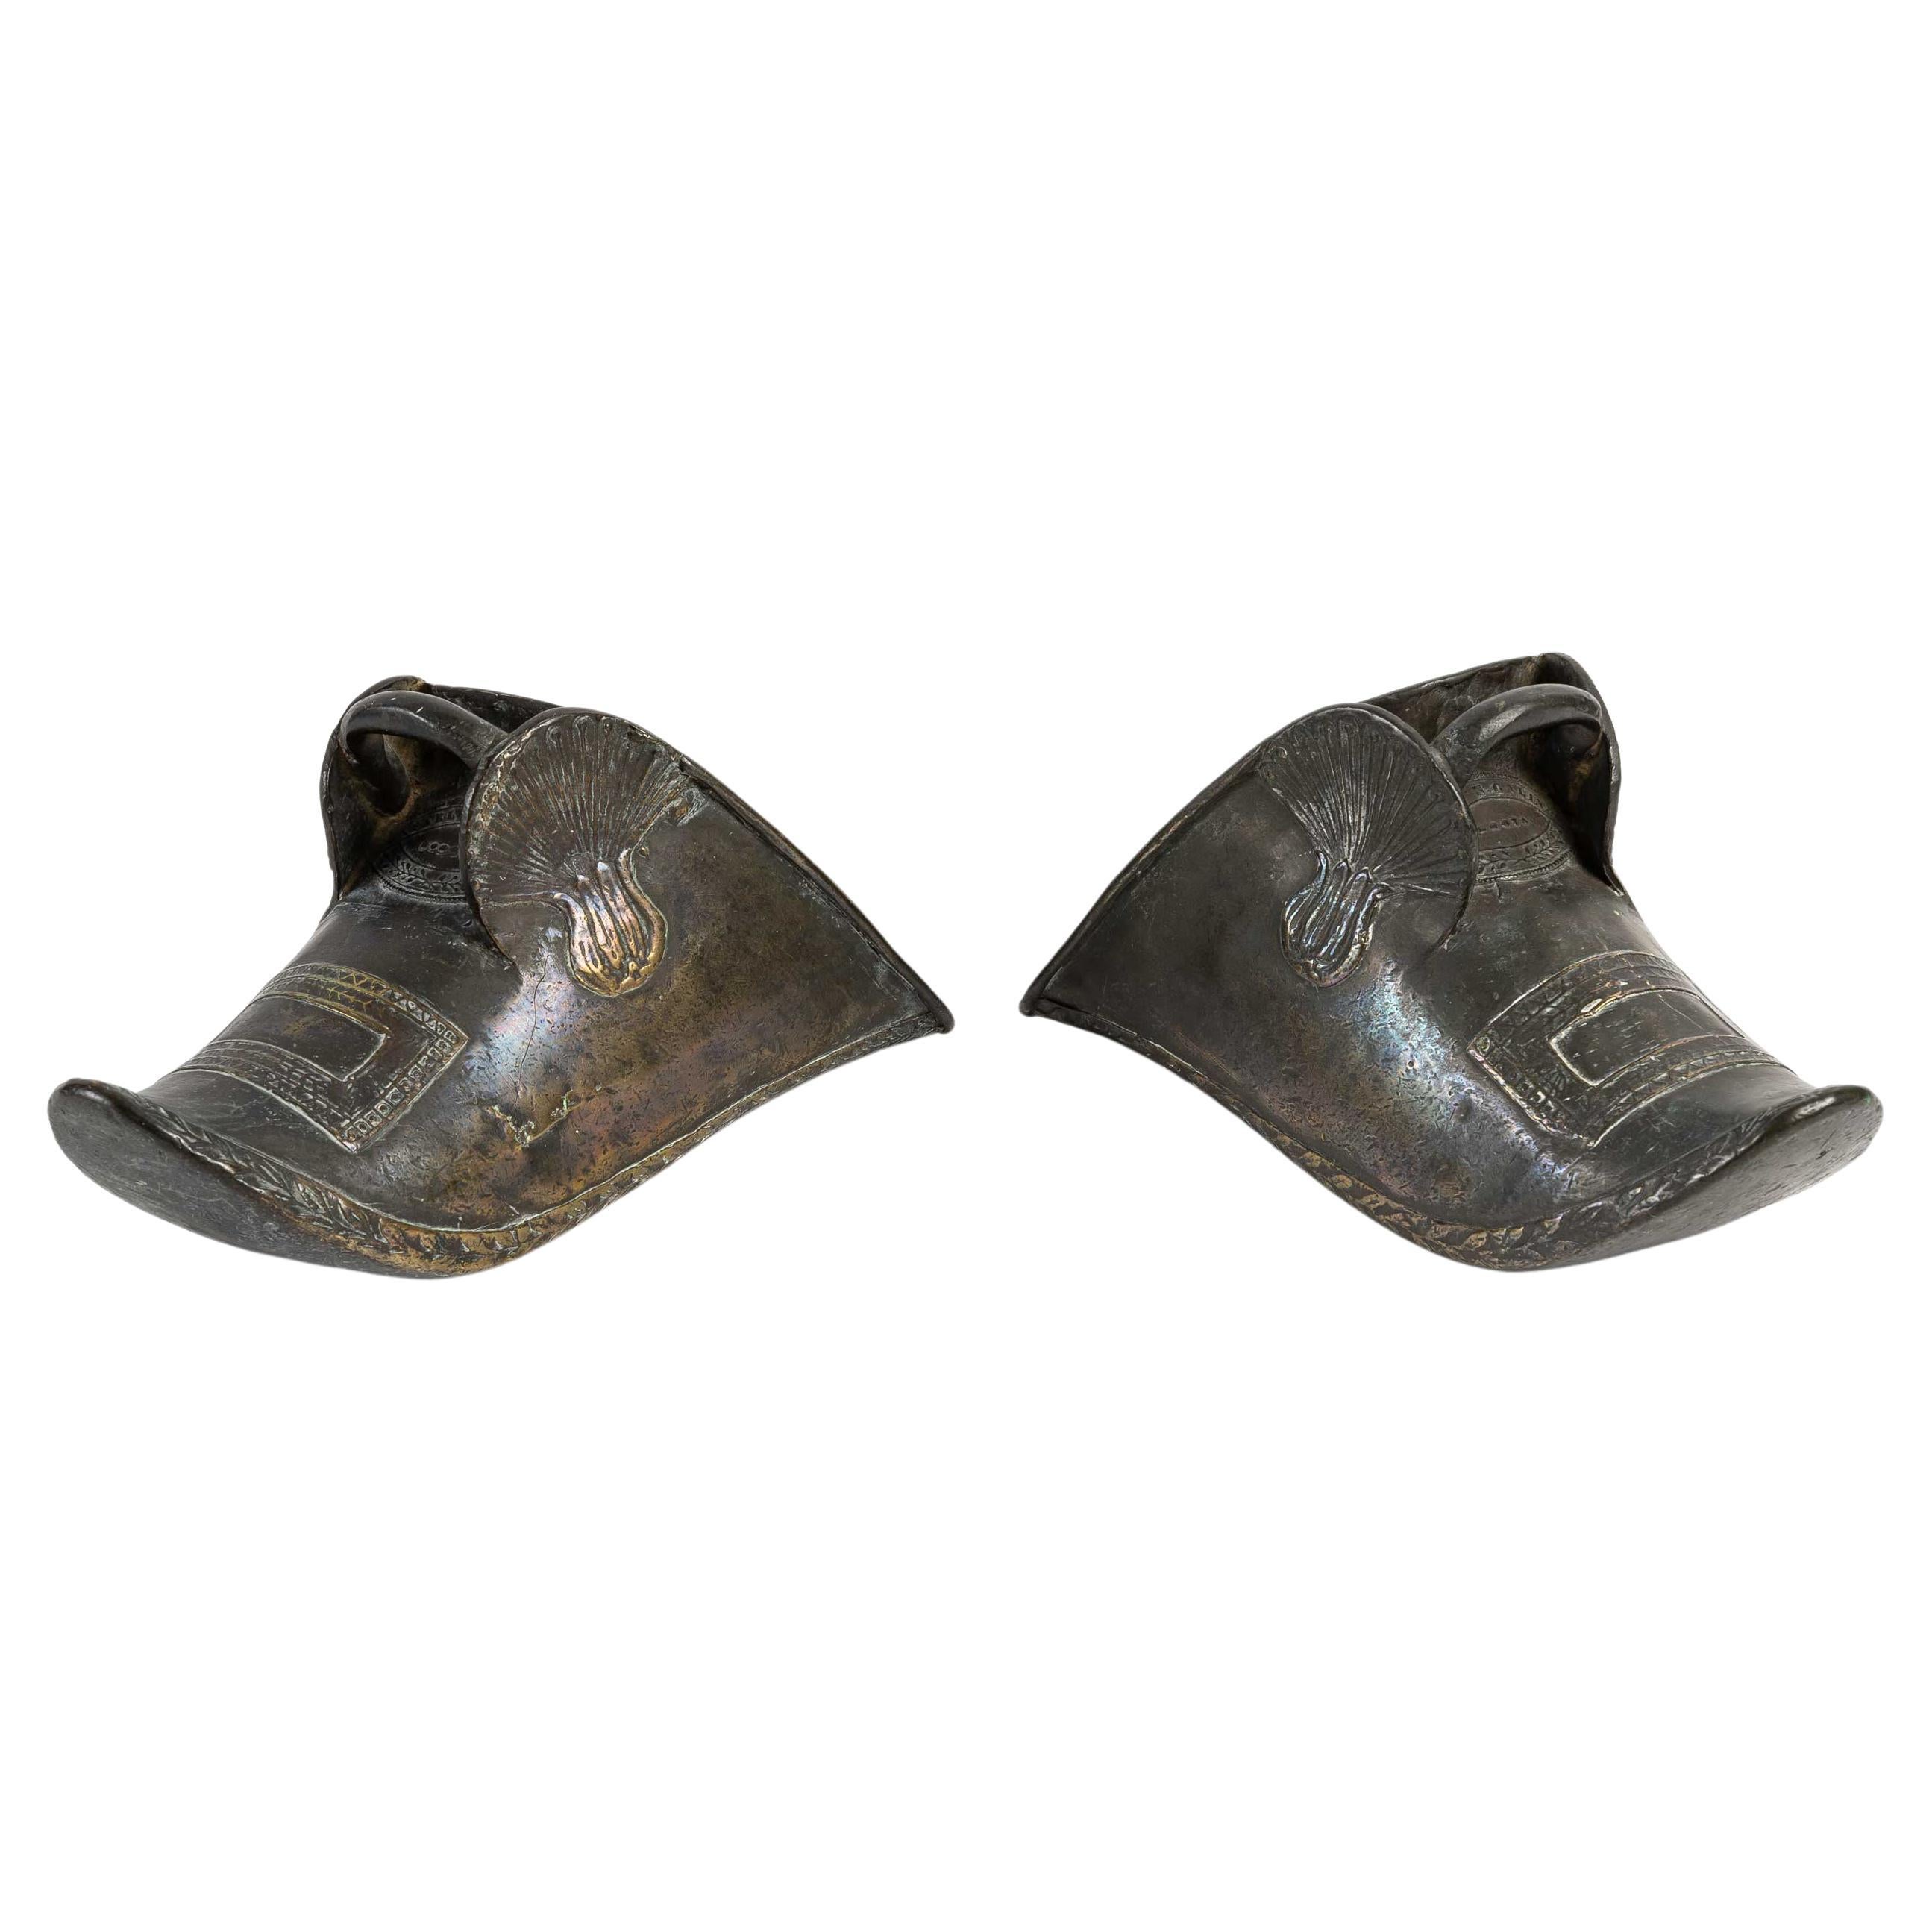 Pair of Bronze Stirrups 'Estribos'